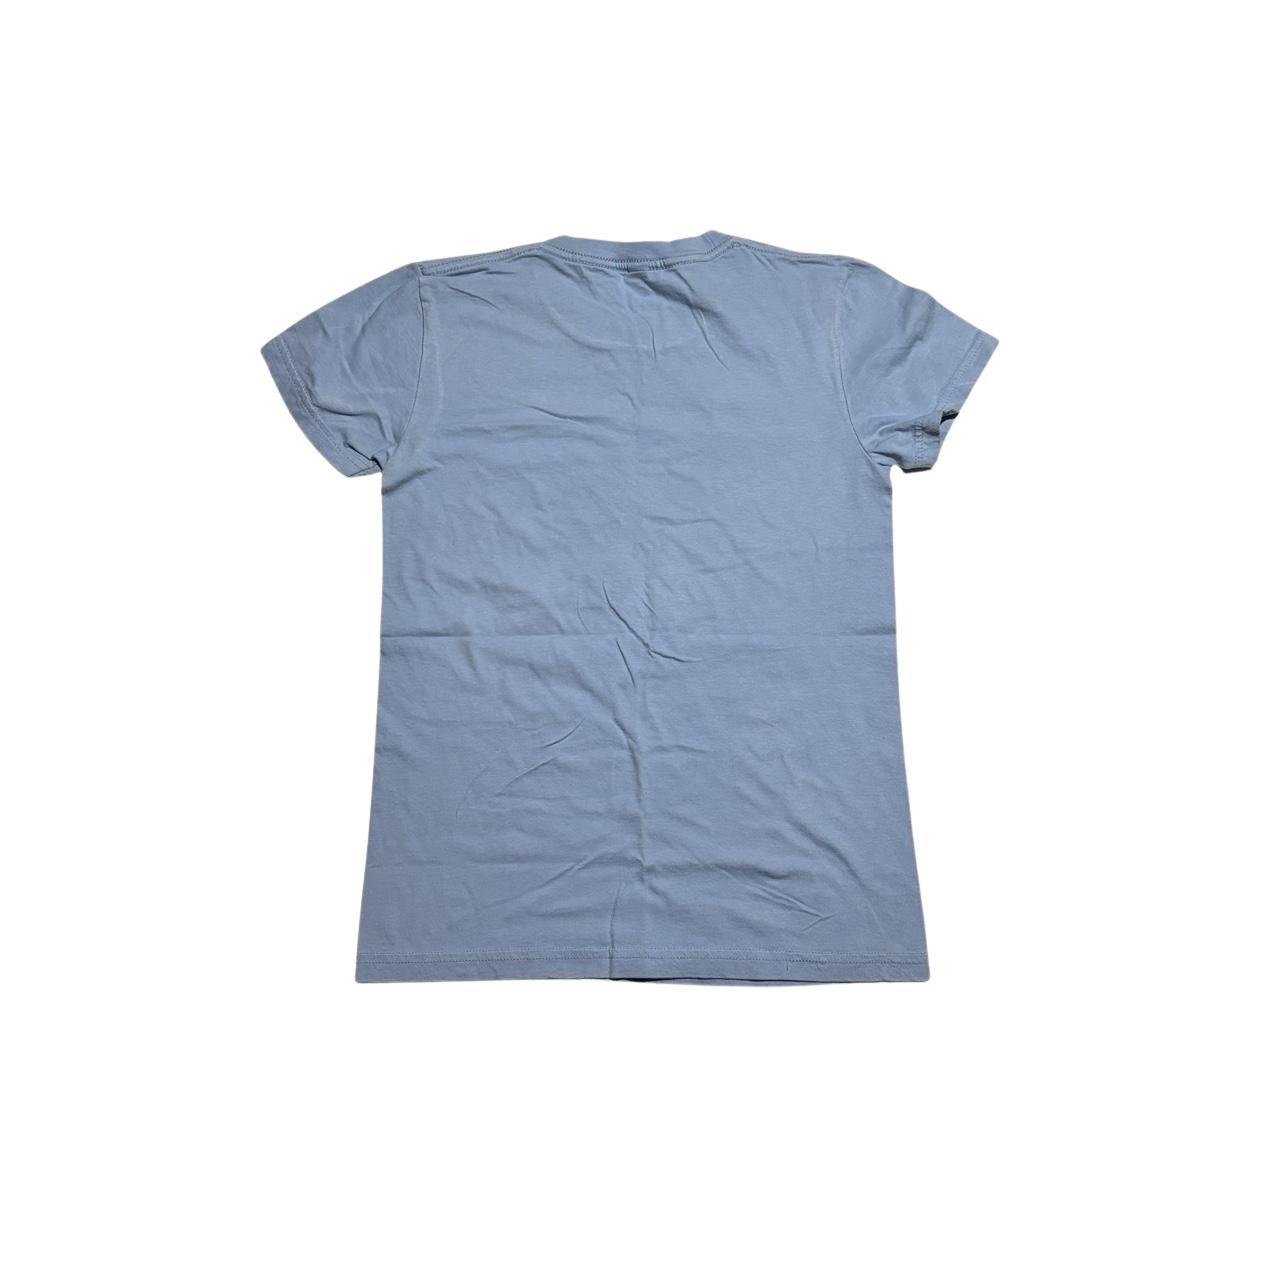 American Apparel Women's Blue Shirt (2)